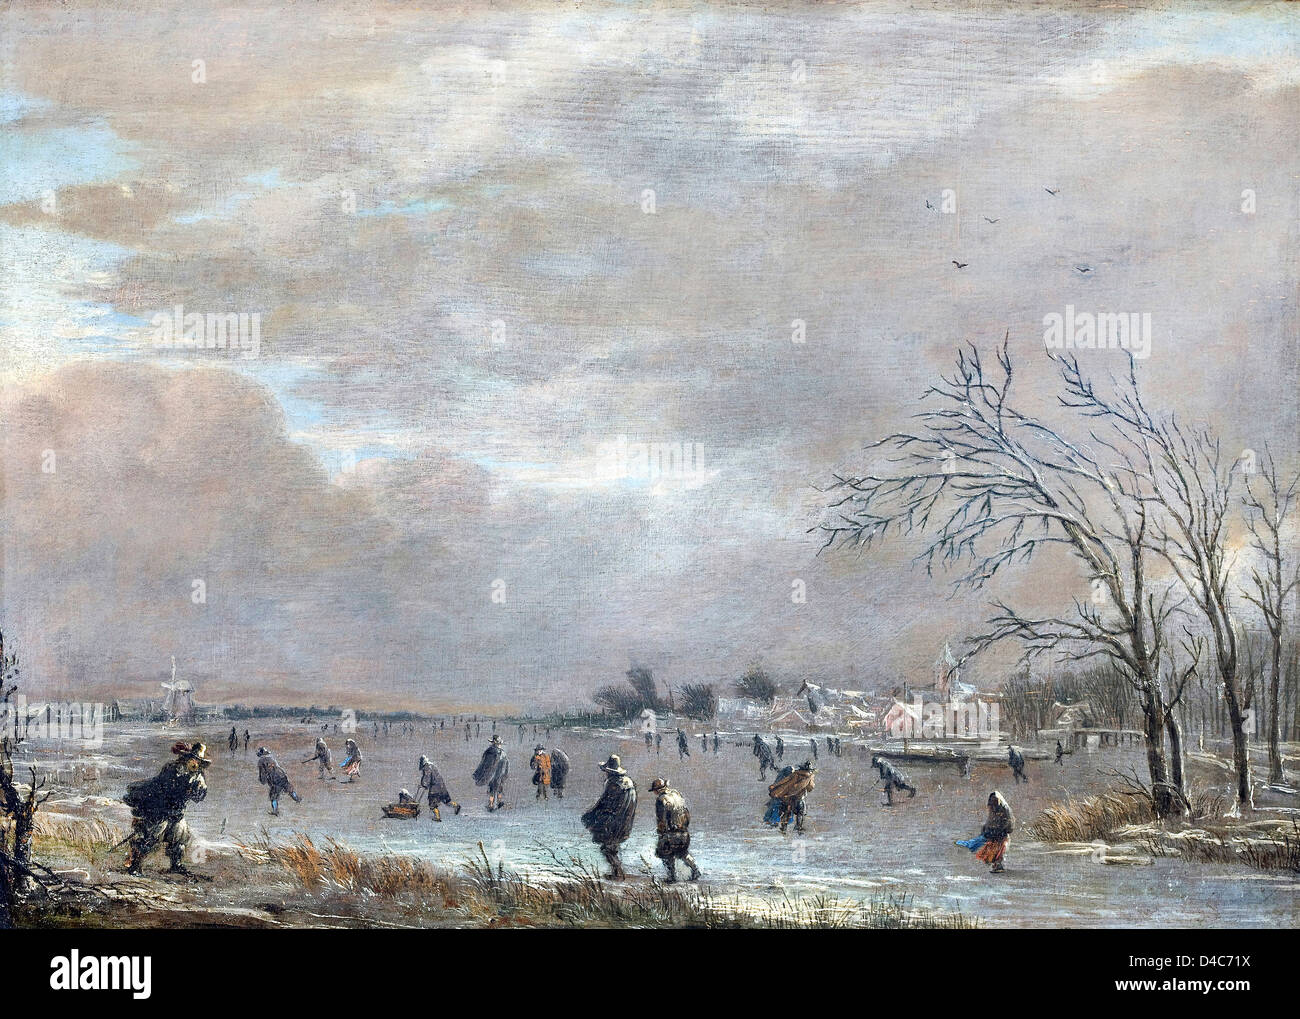 Aert van der Neer, Winter Landscape with Skaters on a Frozen River. Oil on canvas. Hallwyl Museum, Sweden Stock Photo